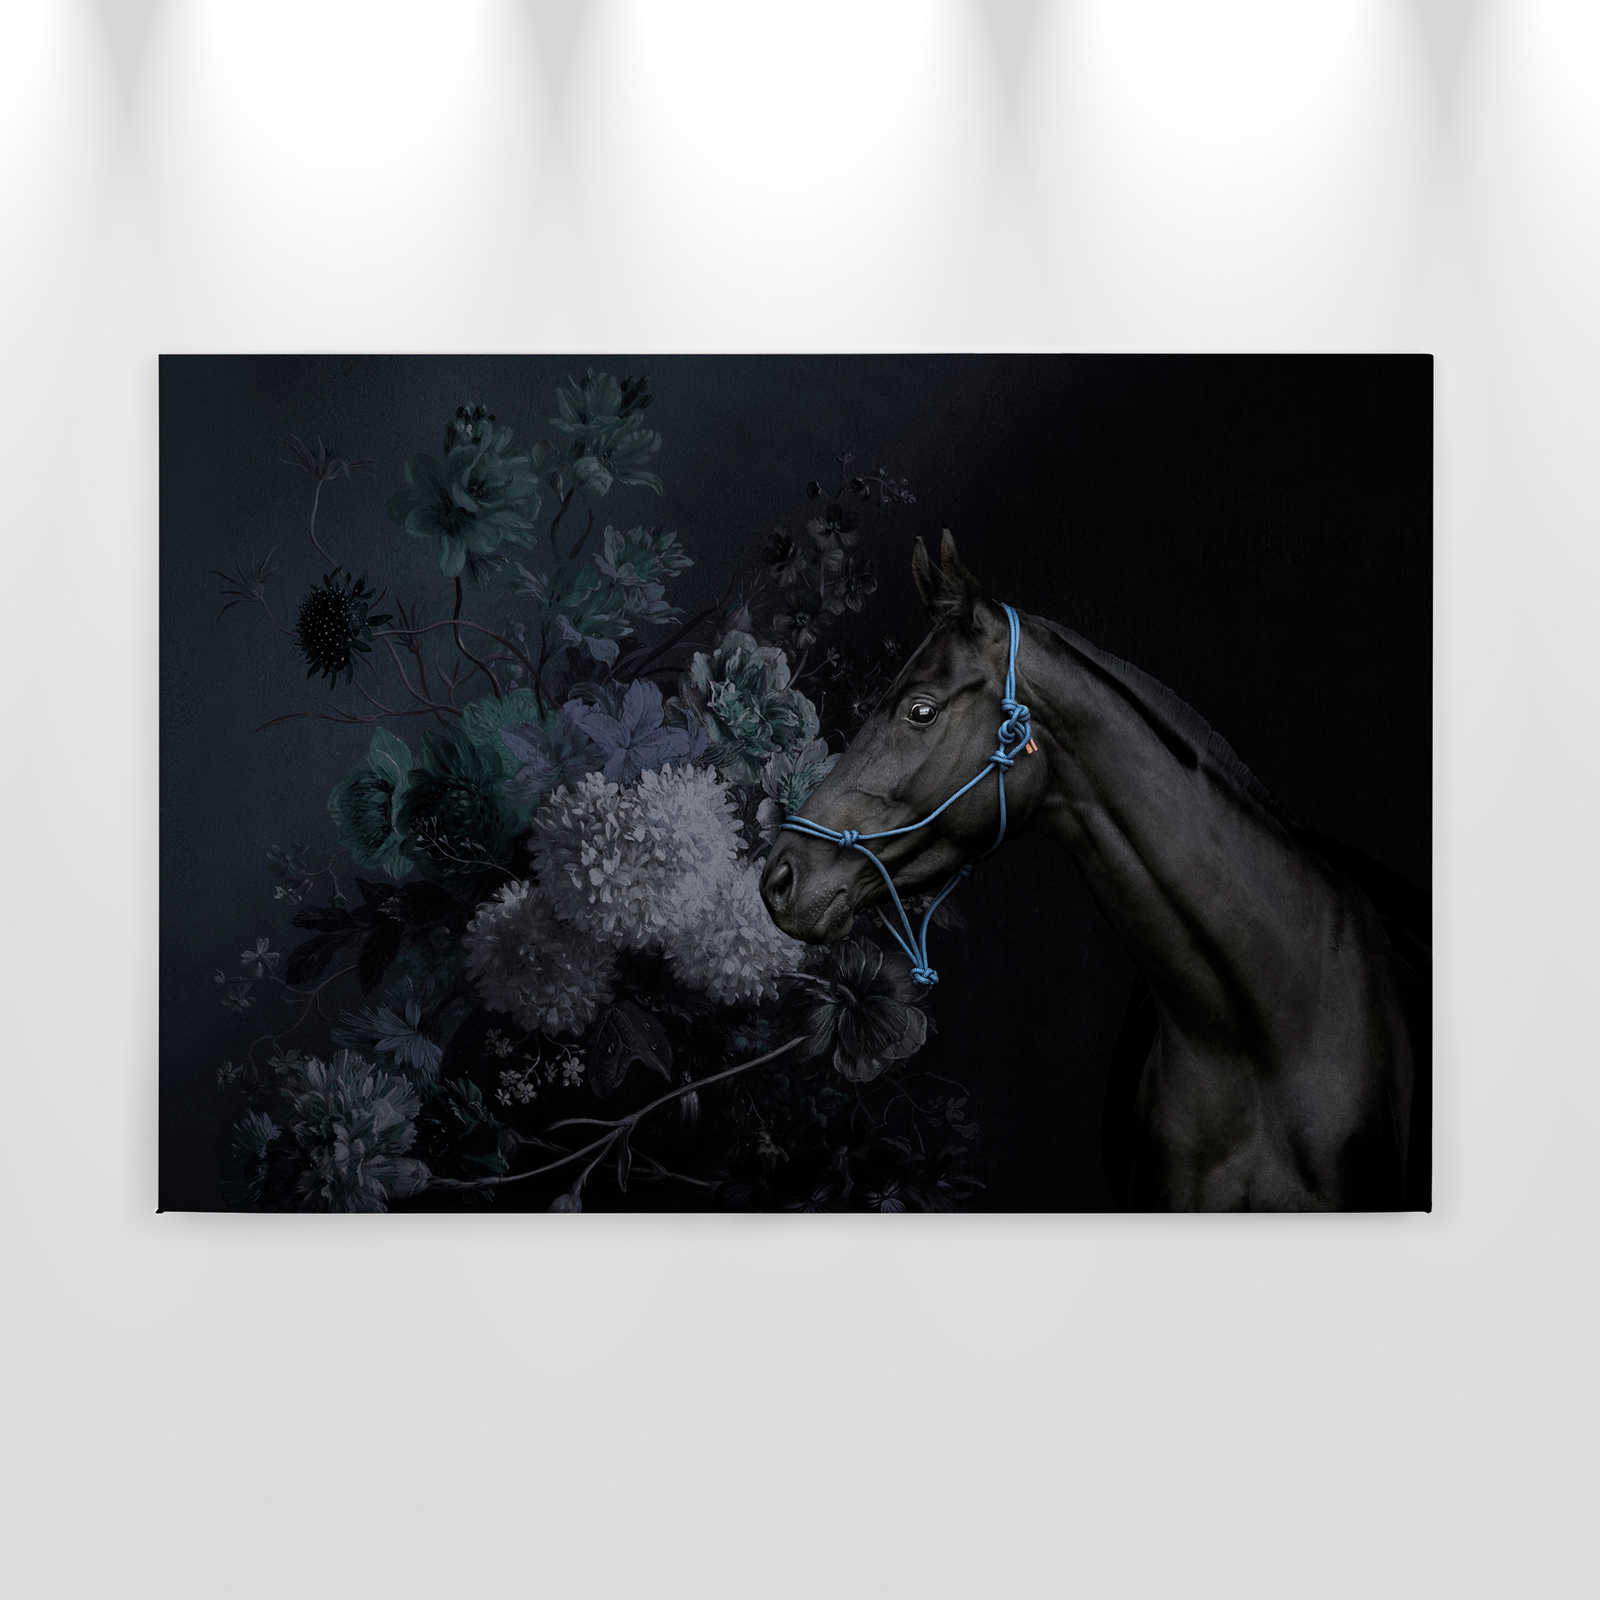             Pintura en lienzo estilo retrato de caballos con flores - 0,90 m x 0,60 m
        